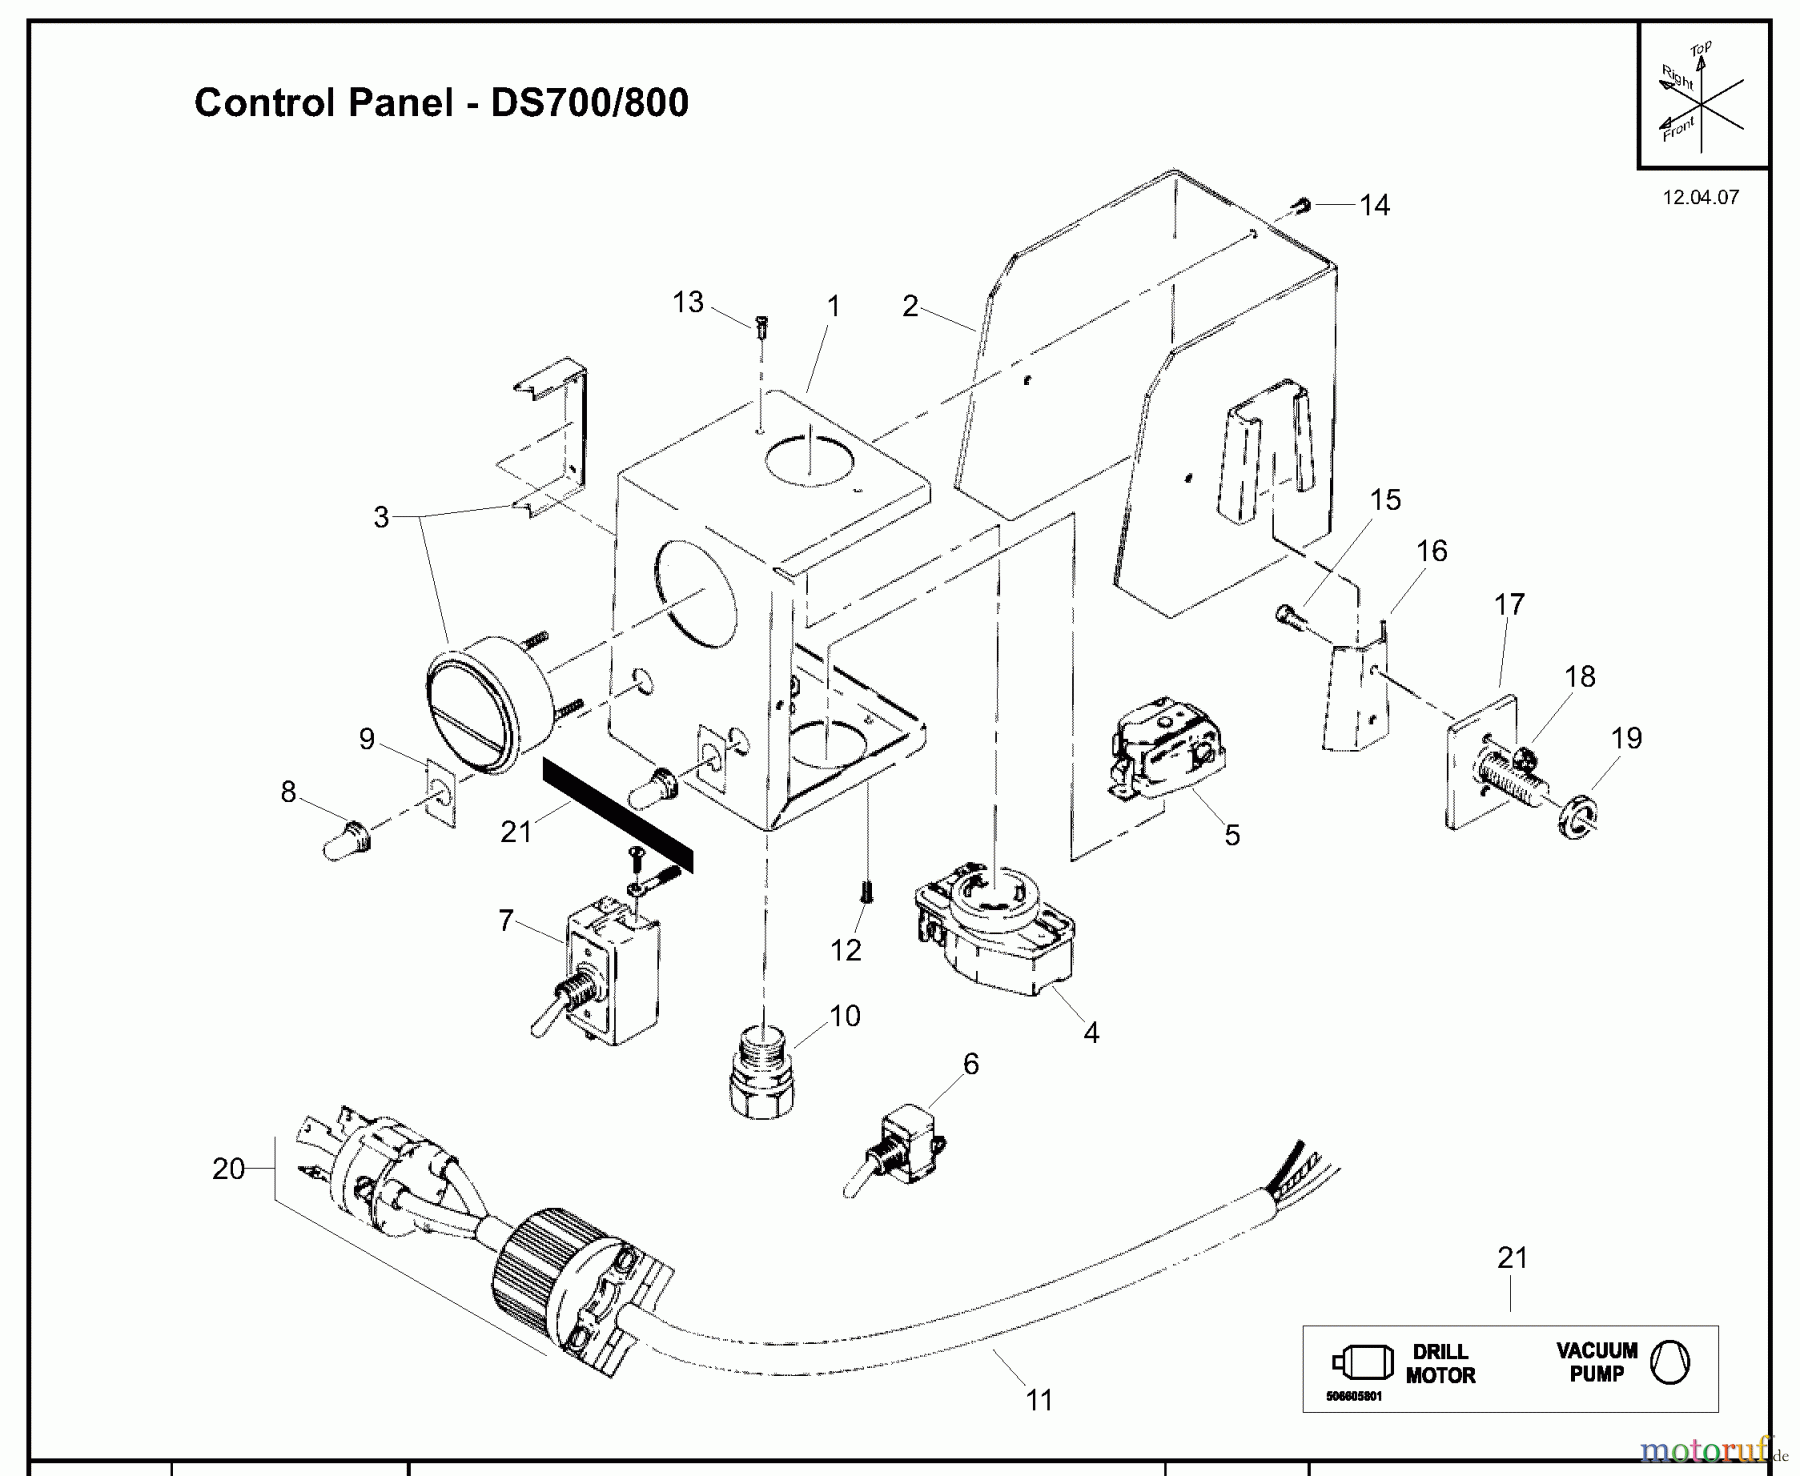  Husqvarna Zubehör DS700 (504625401) - Husqvarna Drill Stand (2007-12 & After) Control Panel